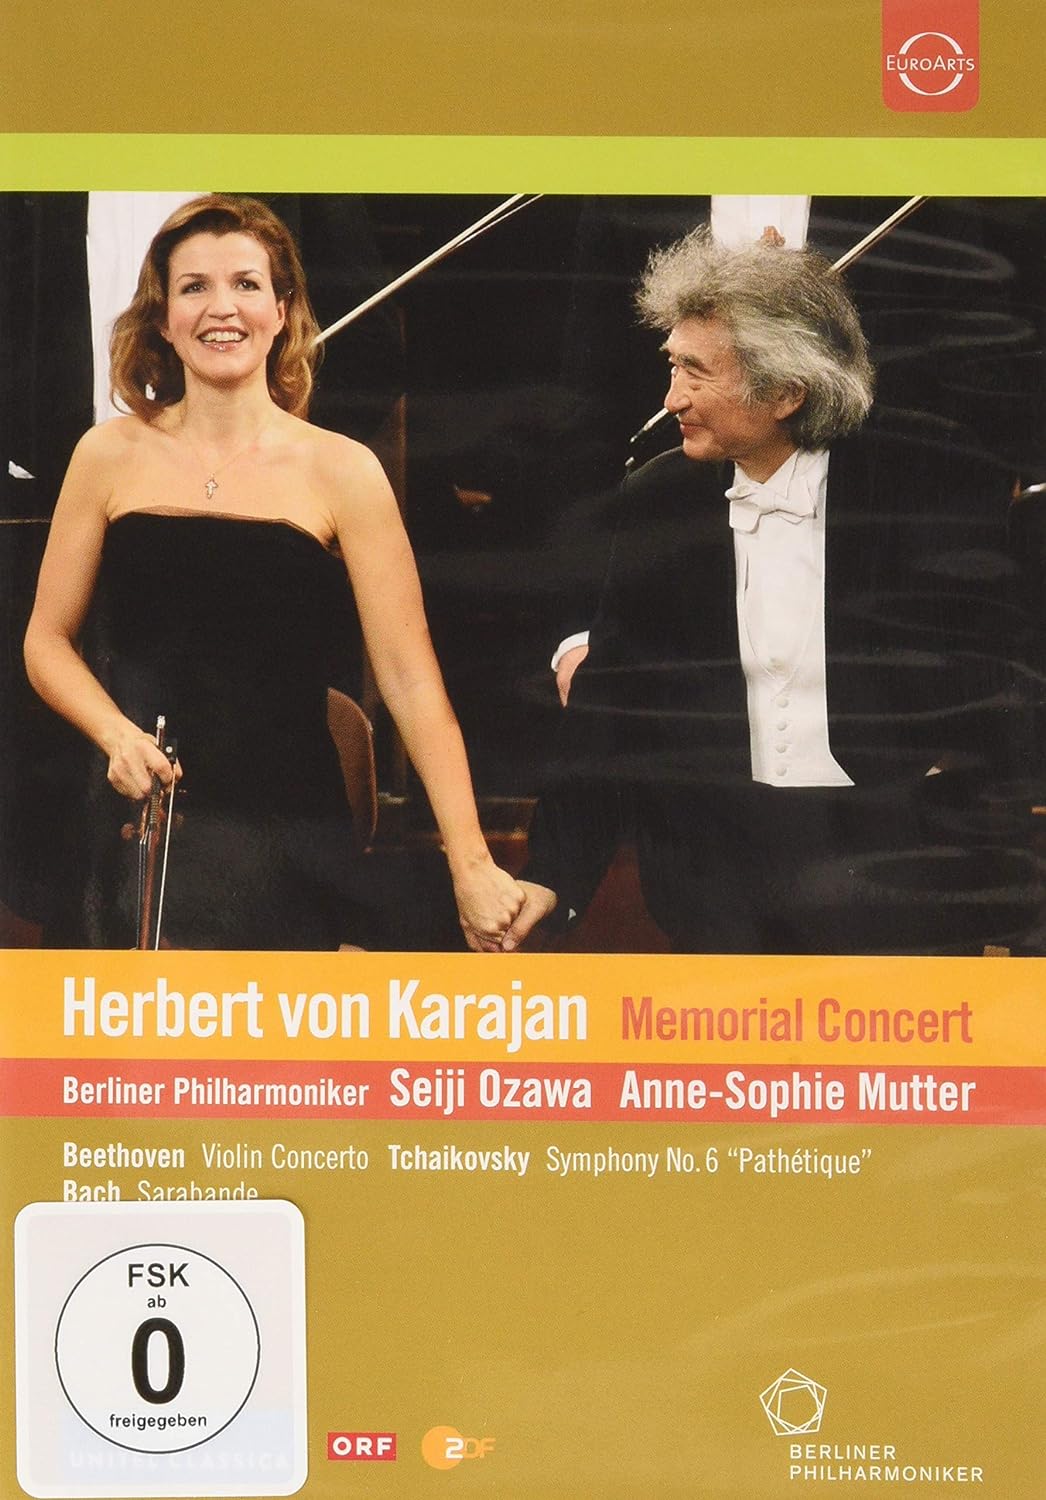 Herbert von Karajan Memorial Concert (DVD) | Berliner Philharmoniker, Anne-Sophie Mutter, Seiji Ozawa